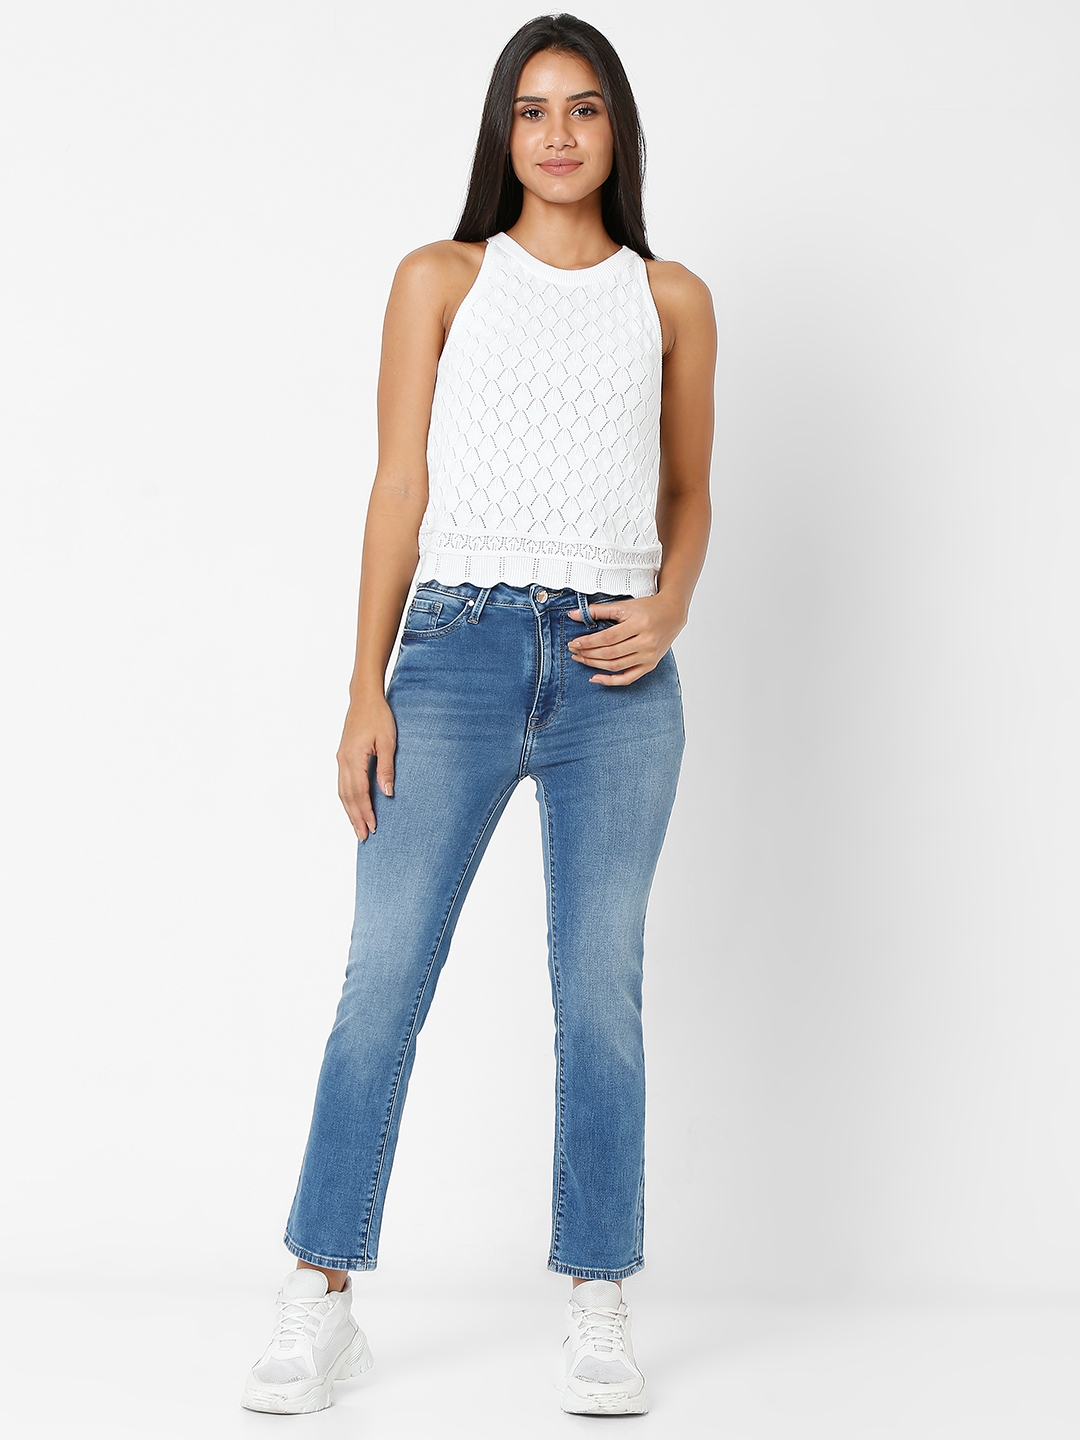 spykar | Women's Blue Cotton Solid Slim Jeans 5